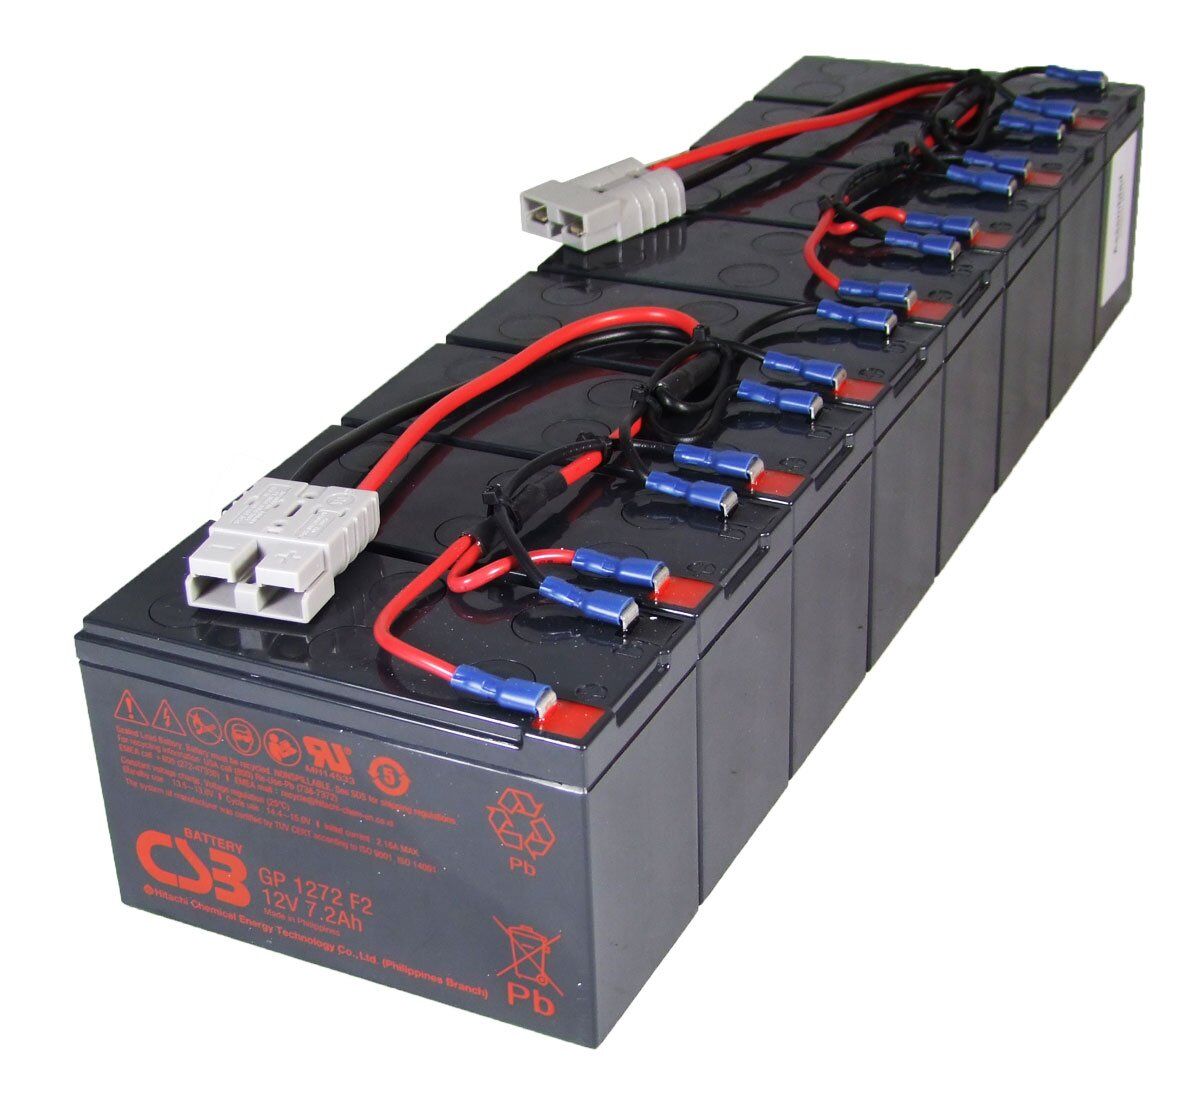 Apc ups battery. APC rbc12. Батарея APC rbc105. APC батареи аккумуляторы ups 3000. APC rbc141.